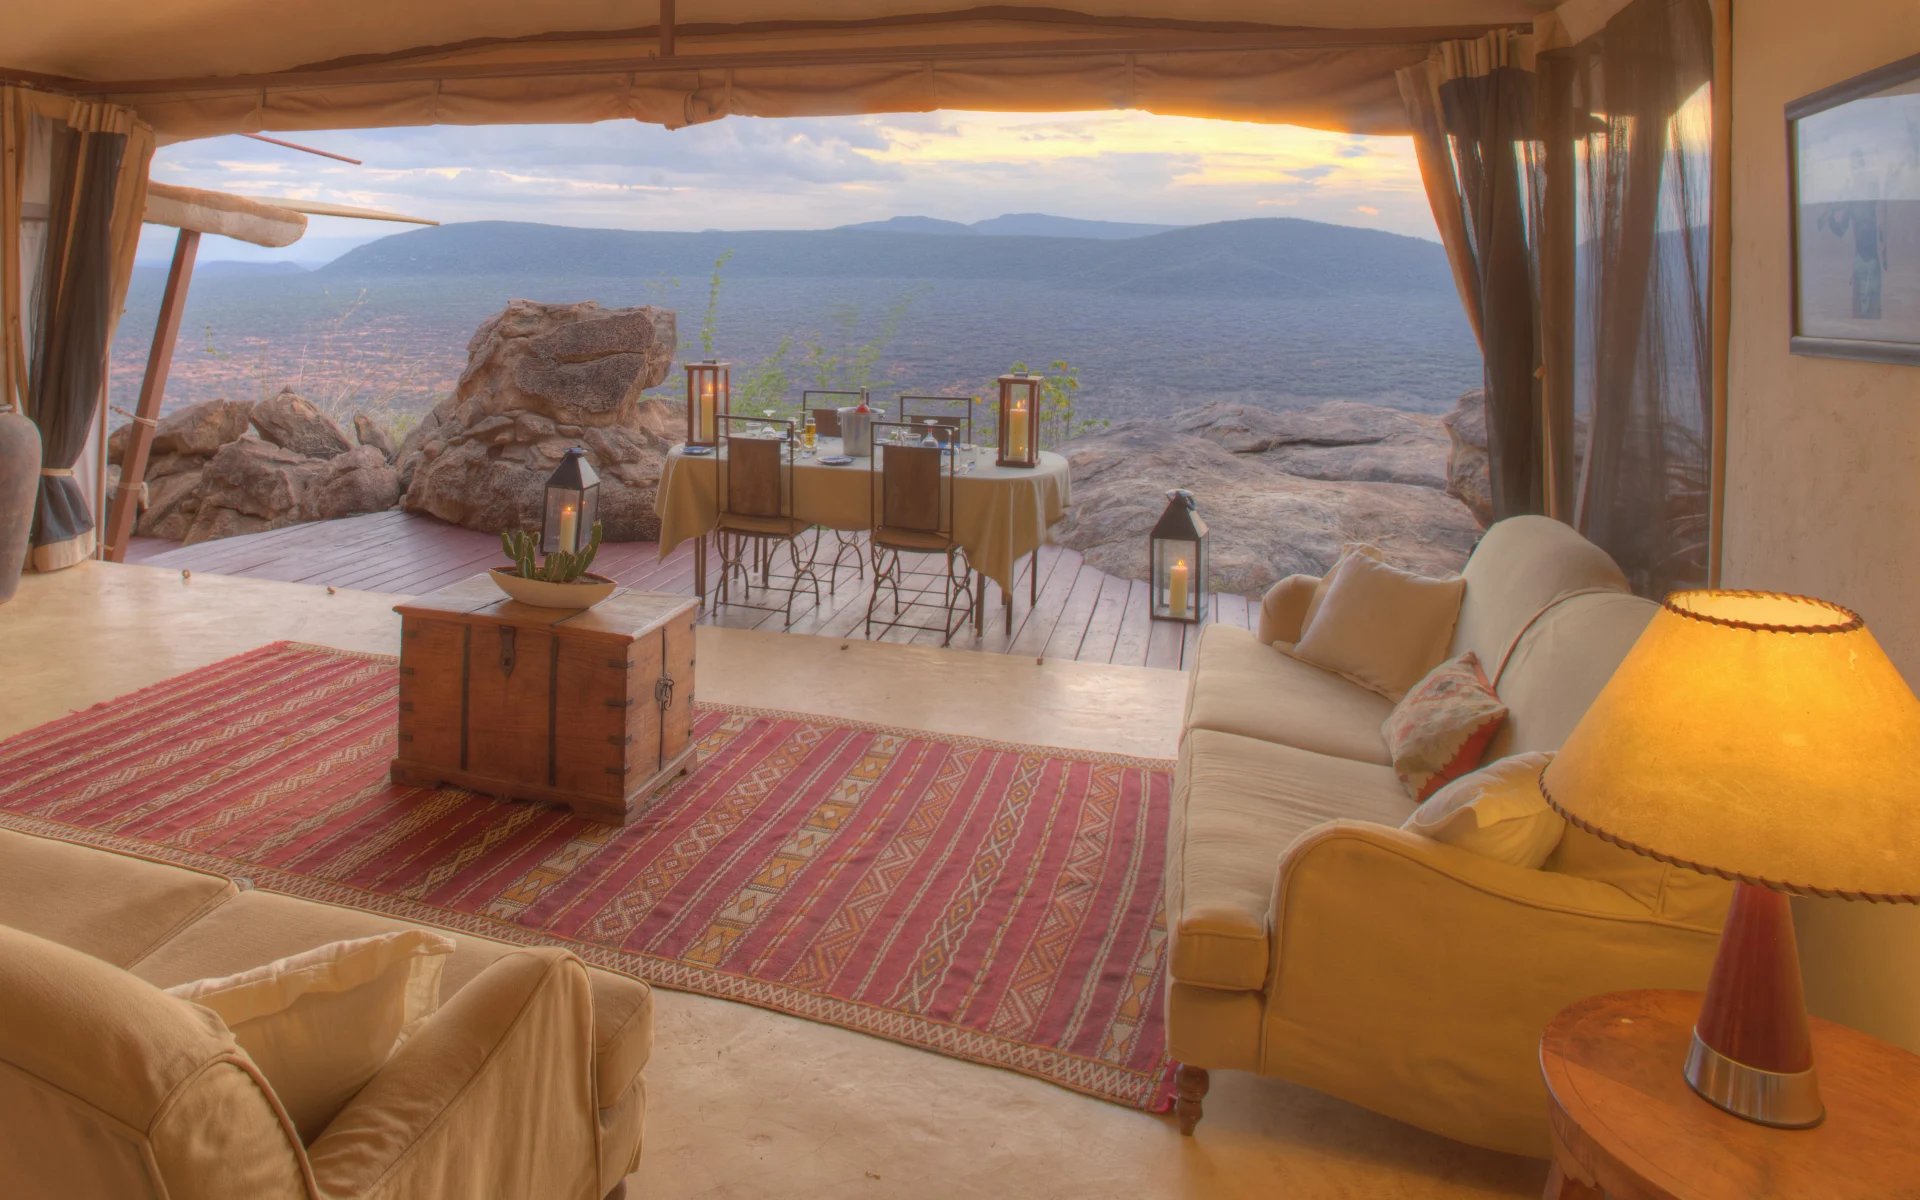 One of the villas at Saruni Samburu overlooks the mountainous landscapes of the Samburu National Reserve.